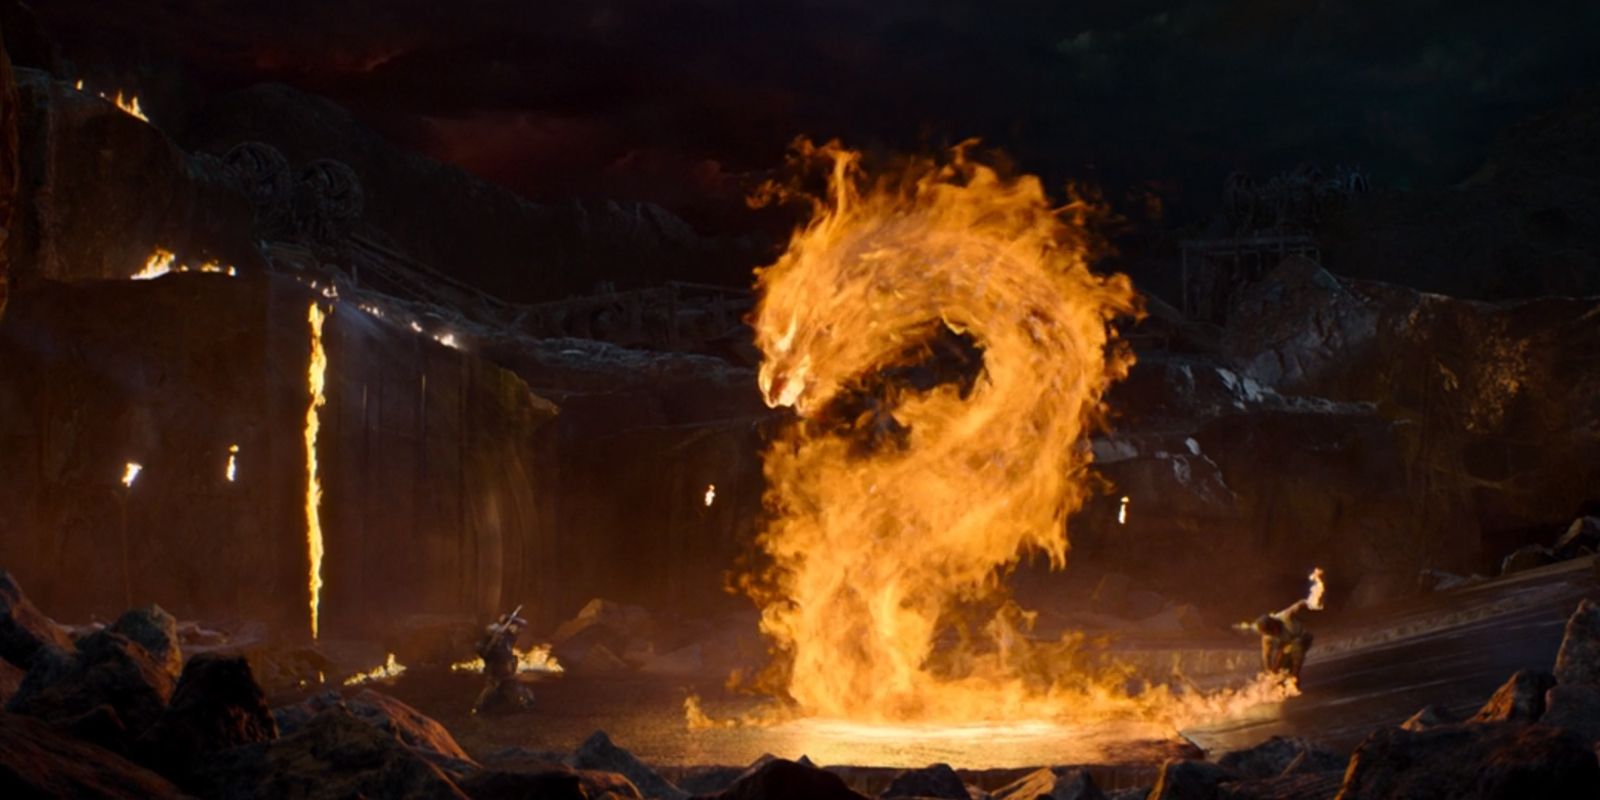 Liu Kang summoning a fire dragon in Mortal Kombat 2021